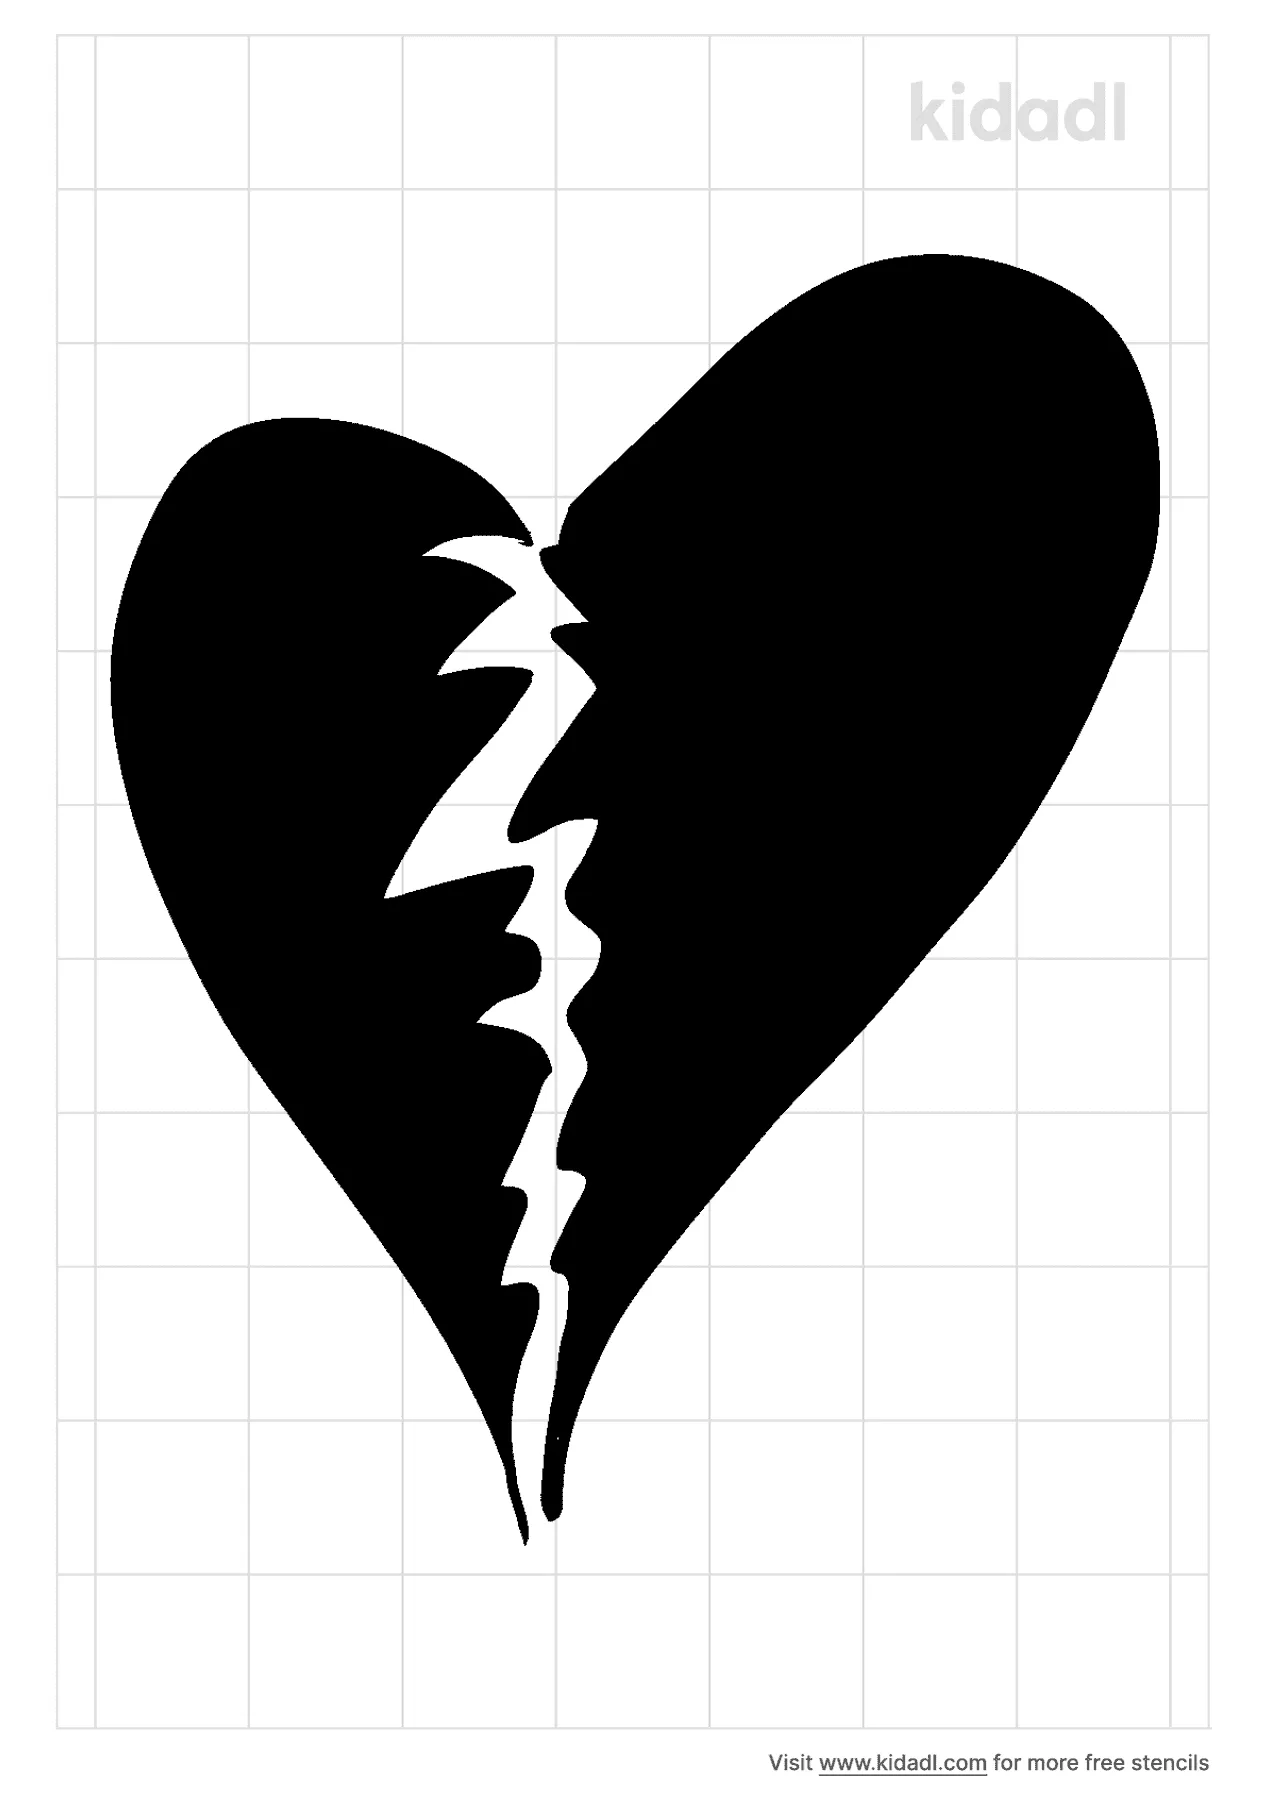 semi colon heart stencils free printable love stencils kidadl and love stencils free printable stencils kidadl